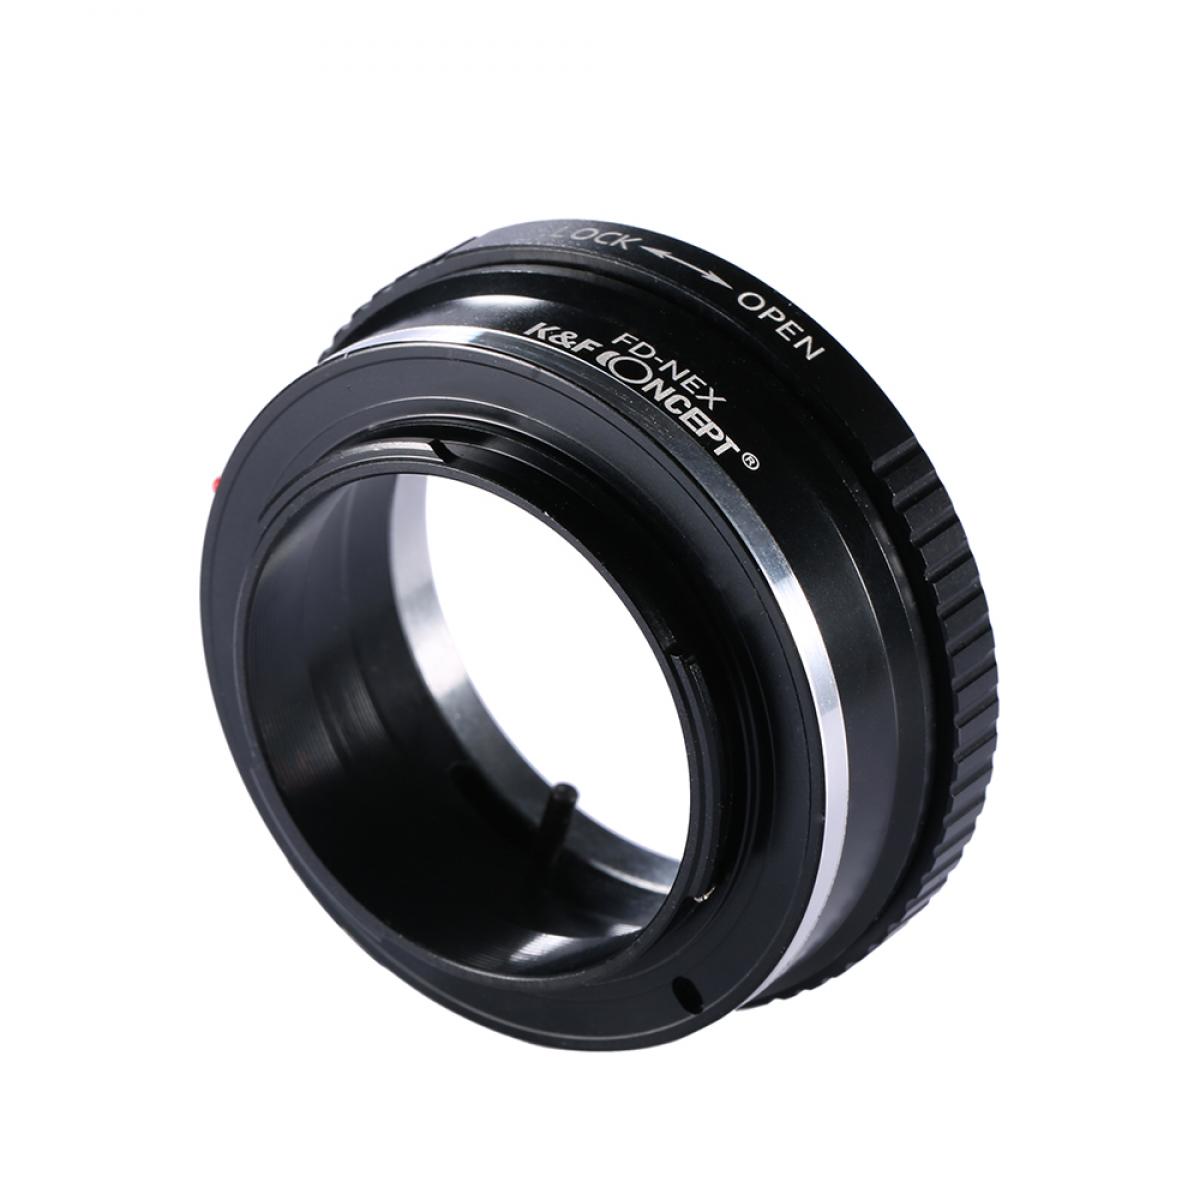 K&F Concept Lens Adapter KF06.071 for FD-NEX